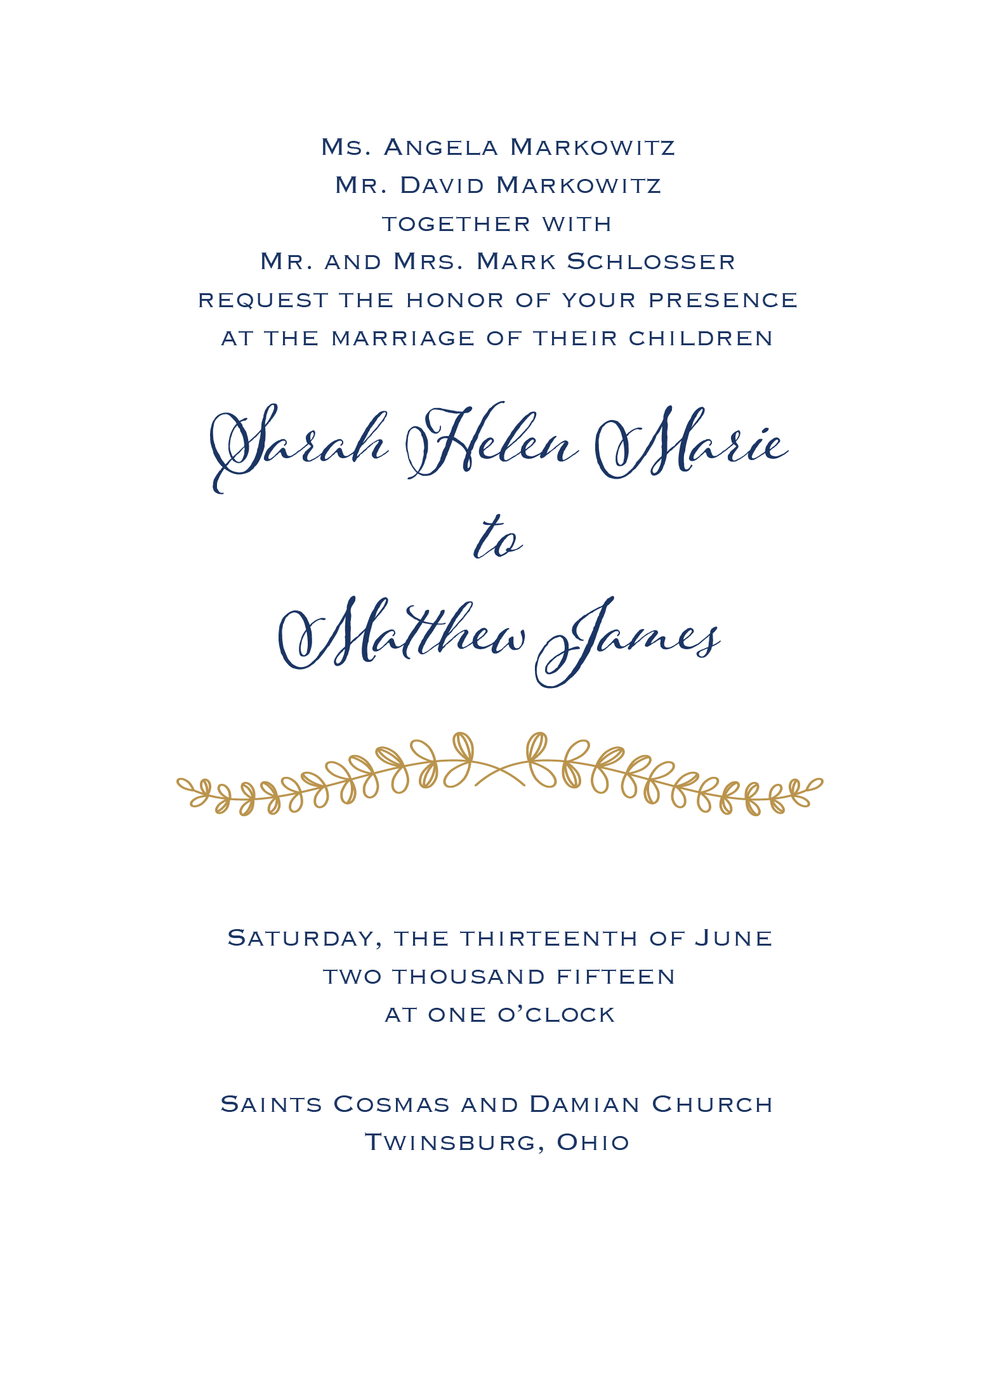 Sarah_Gray Wedding Suite_Invitation.png